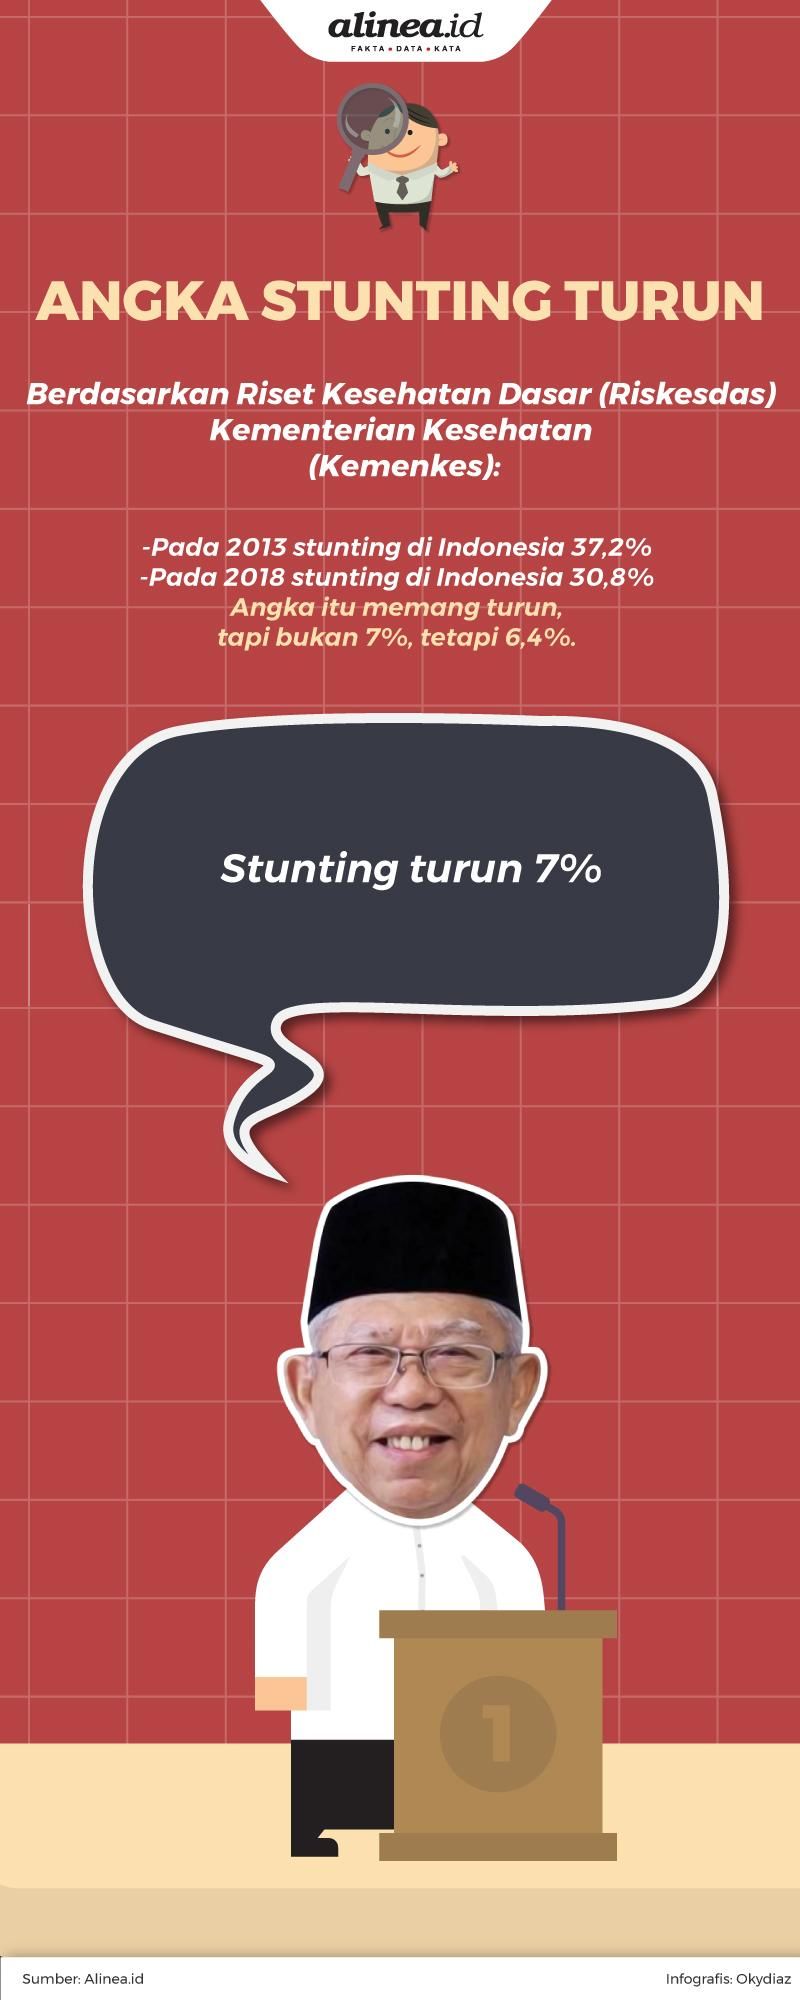 Menurut Ma'ruf Amin, angka stunting di Indonesia menurun.